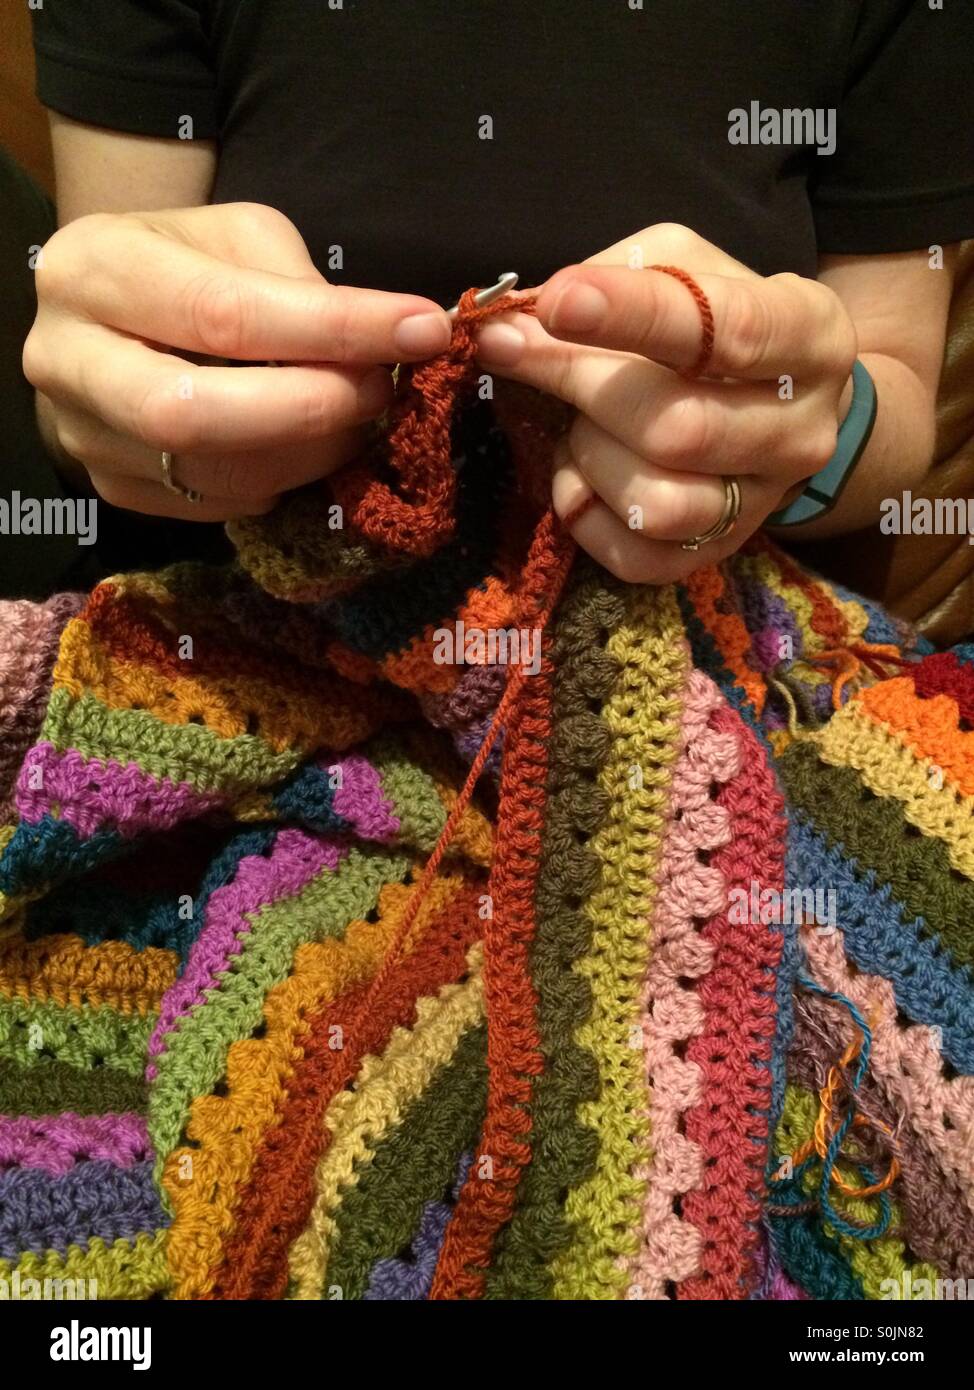 Hands crocheting Stock Photo